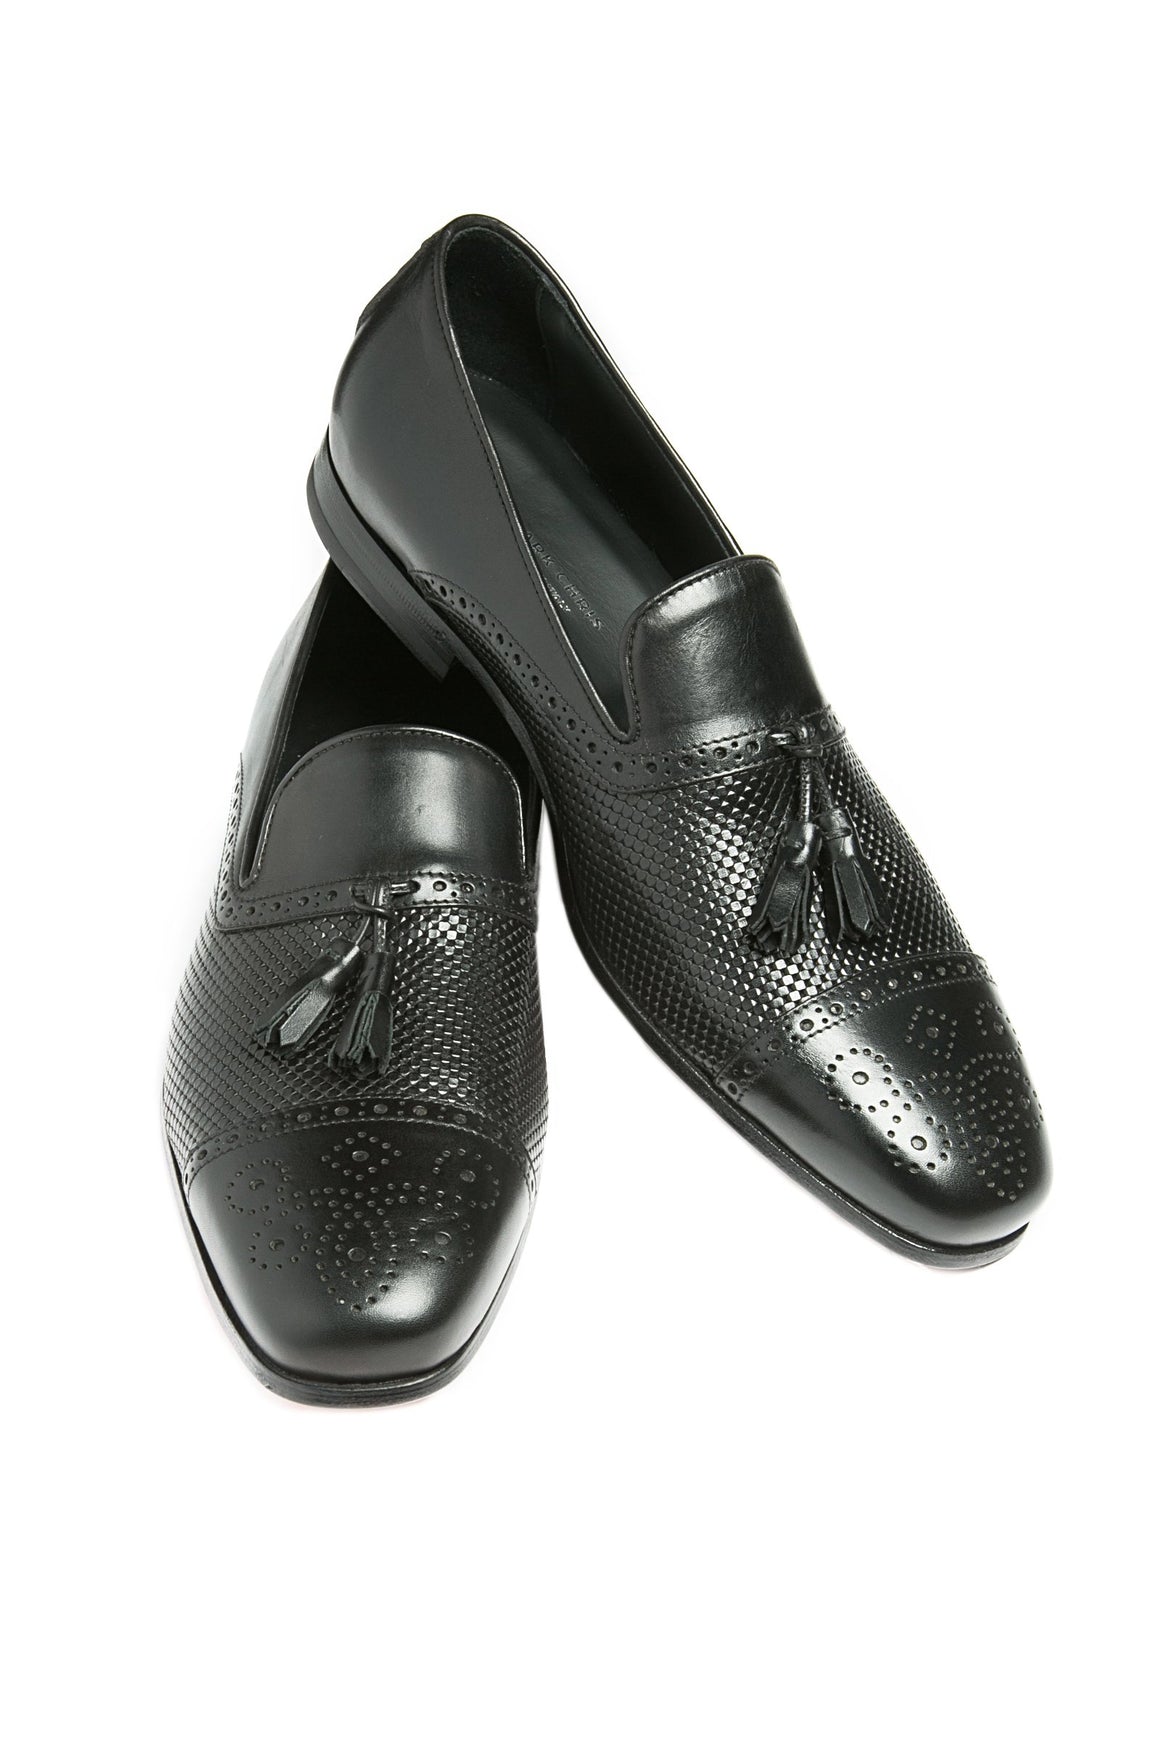 Kingsman - Black - Mark Chris Shoes